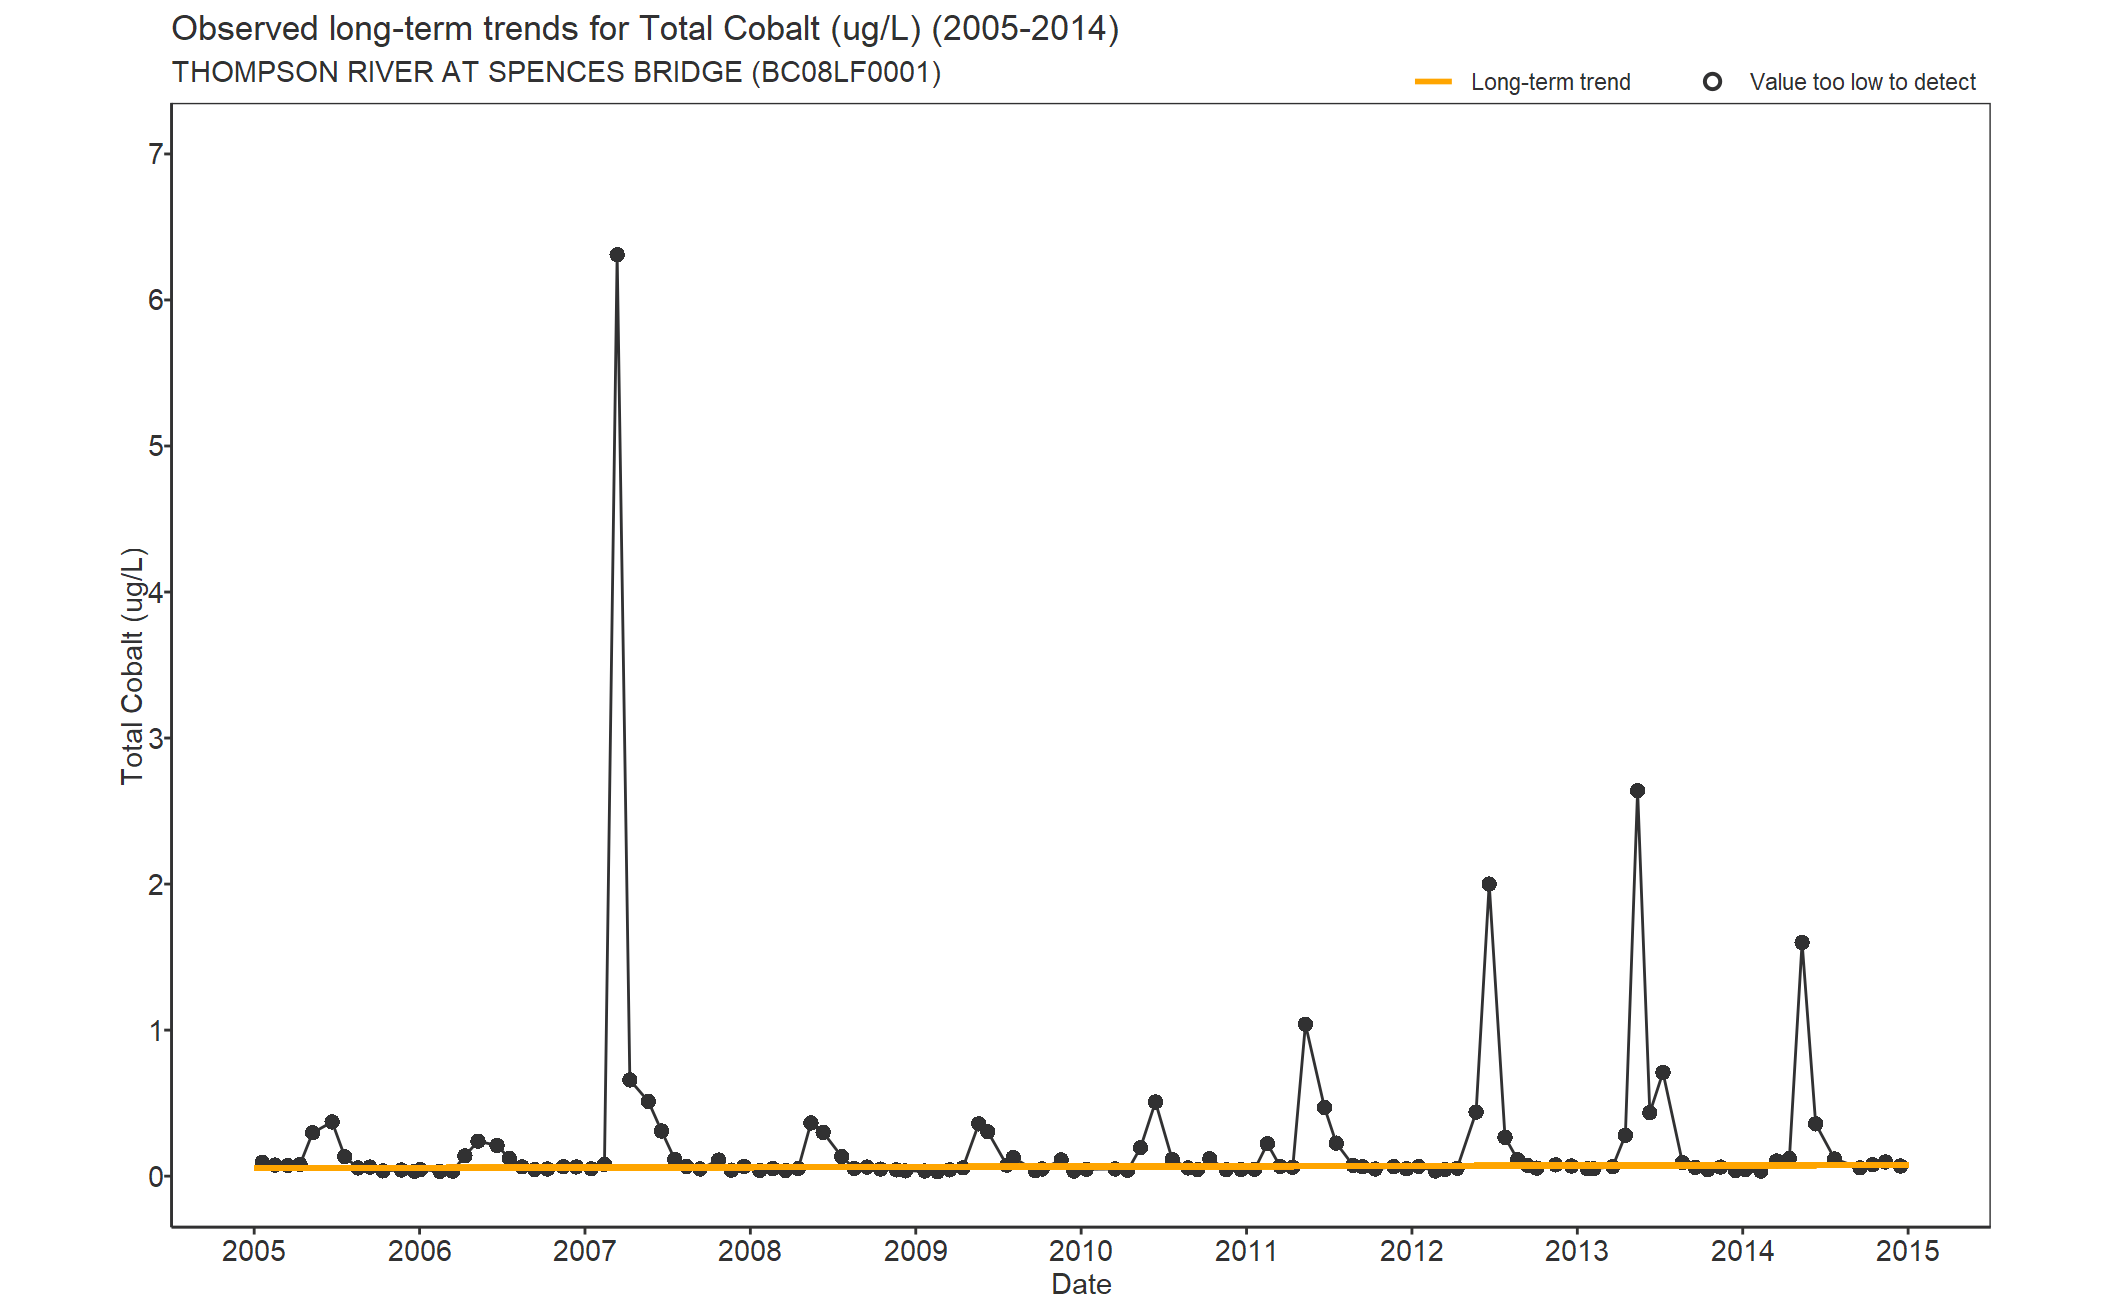 Observed long-term trends for Cobalt Total (2005-2014)